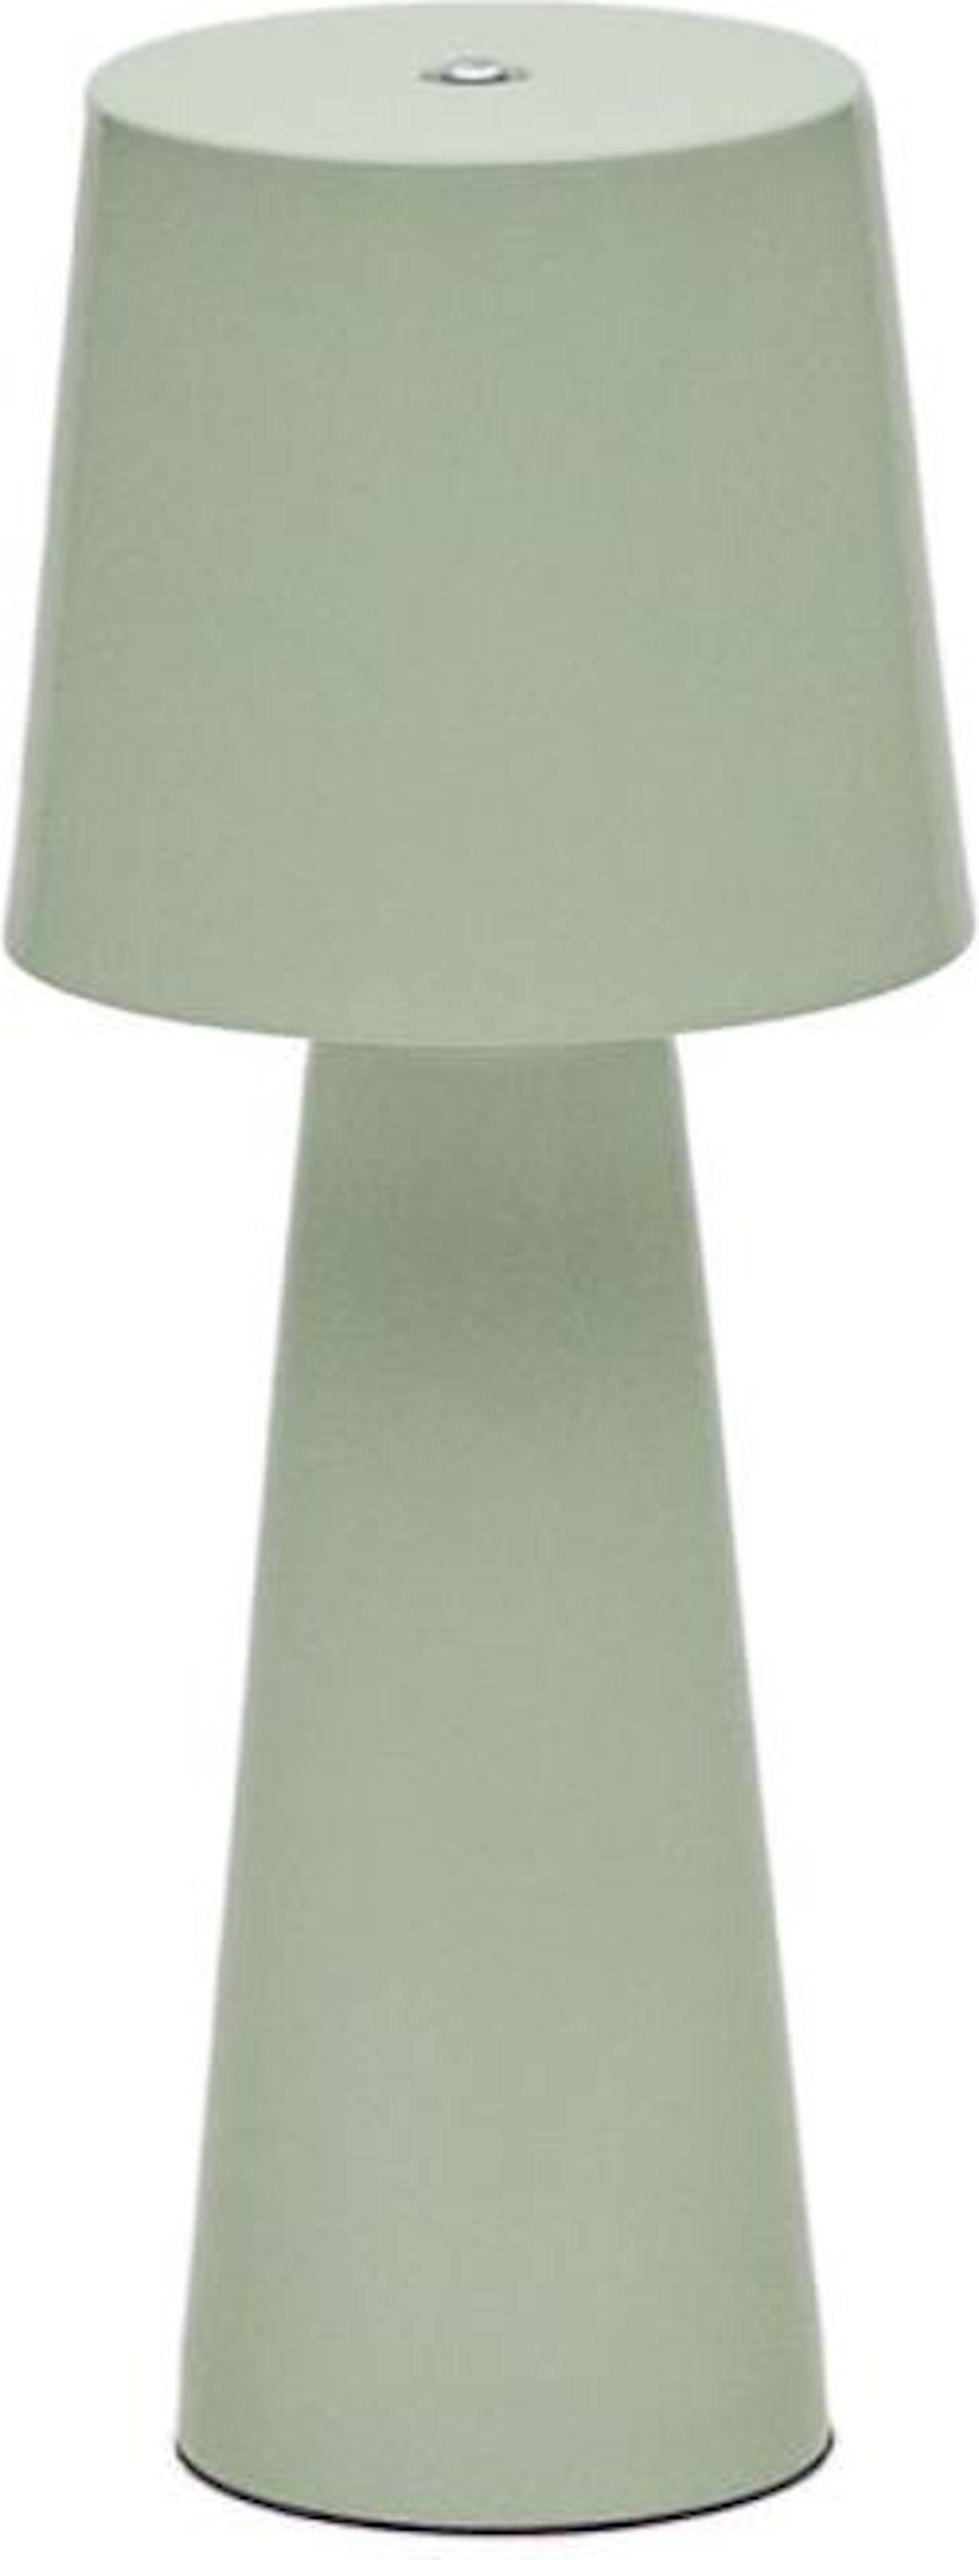 LAFORMA Arenys lille bordlampe med malet turkis finish